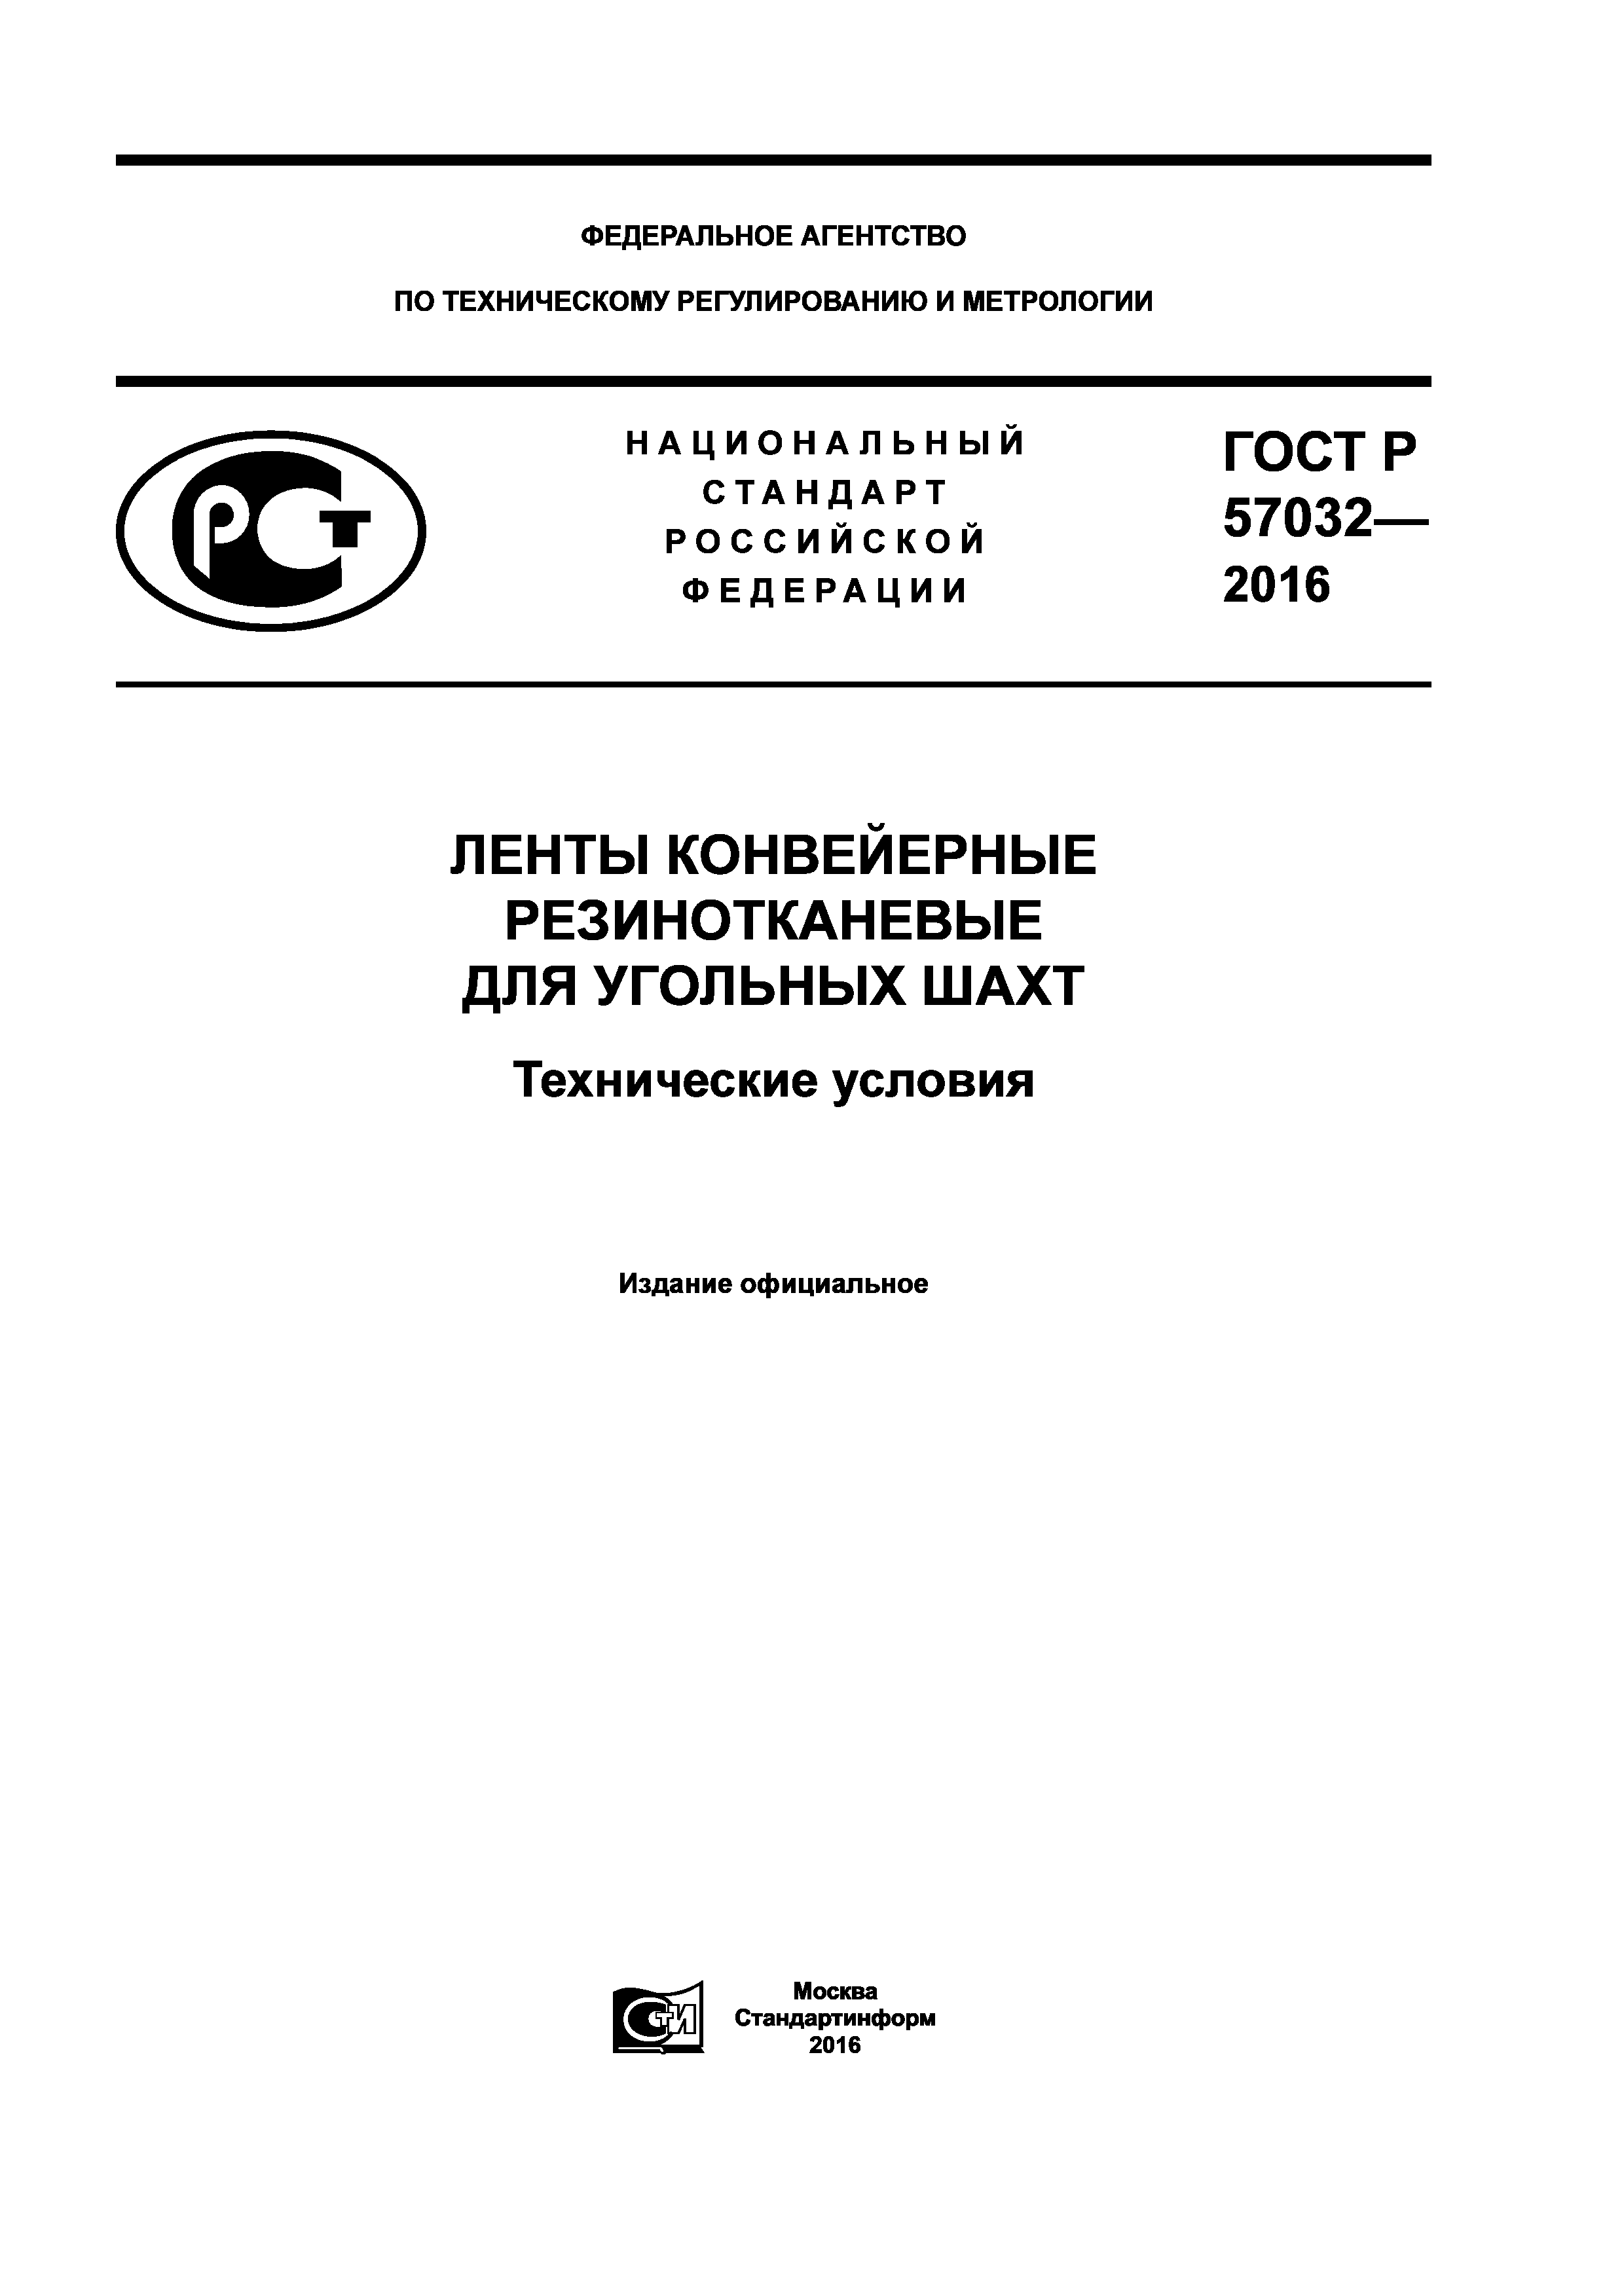 ГОСТ Р 57032-2016